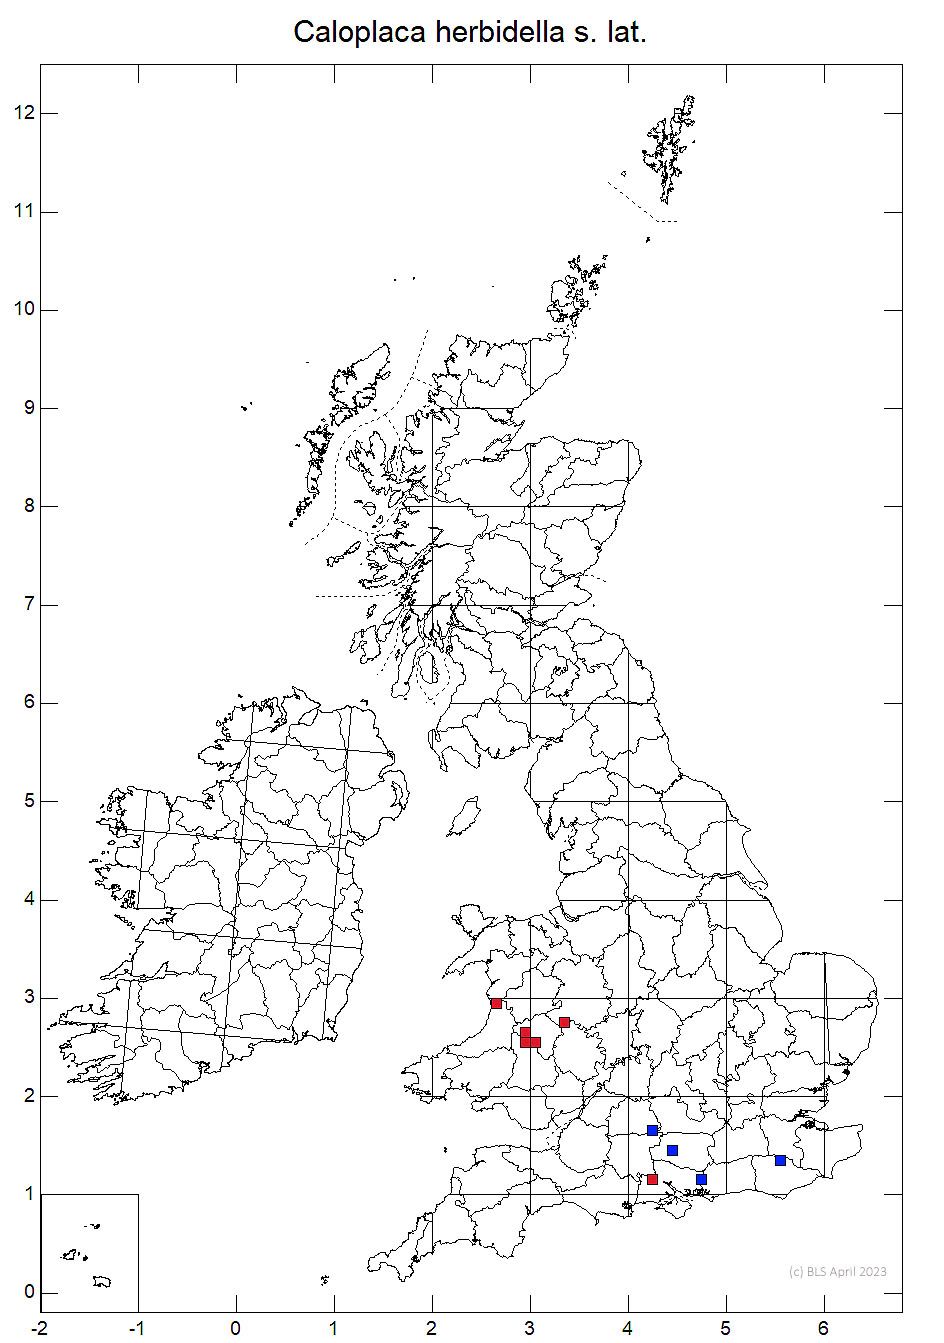 Caloplaca herbidella s. lat. 10km sq distribution map